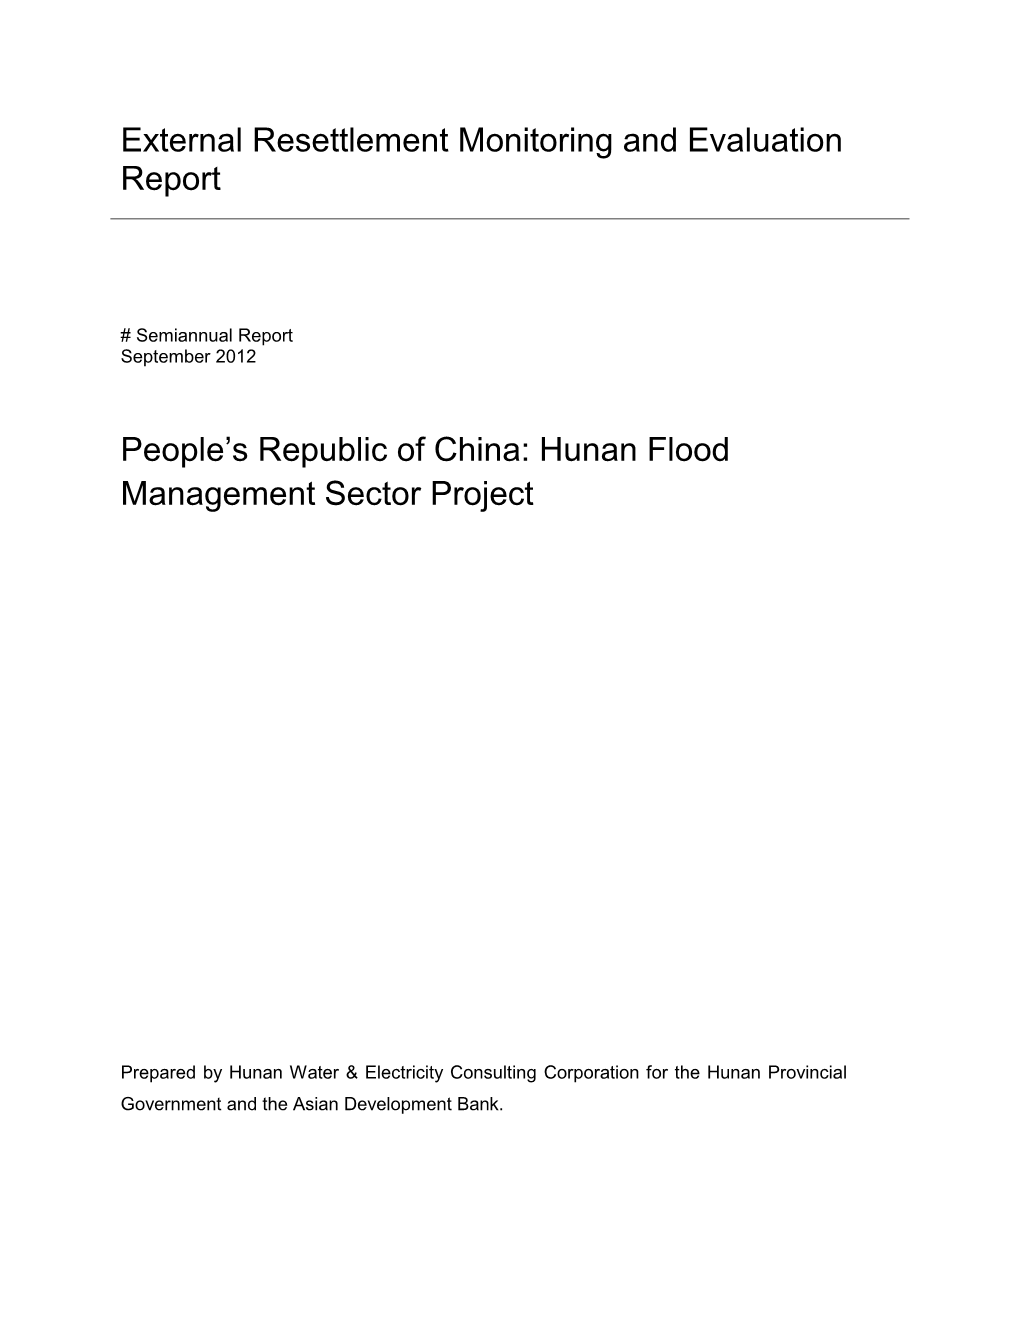 Flood Management Sector Project